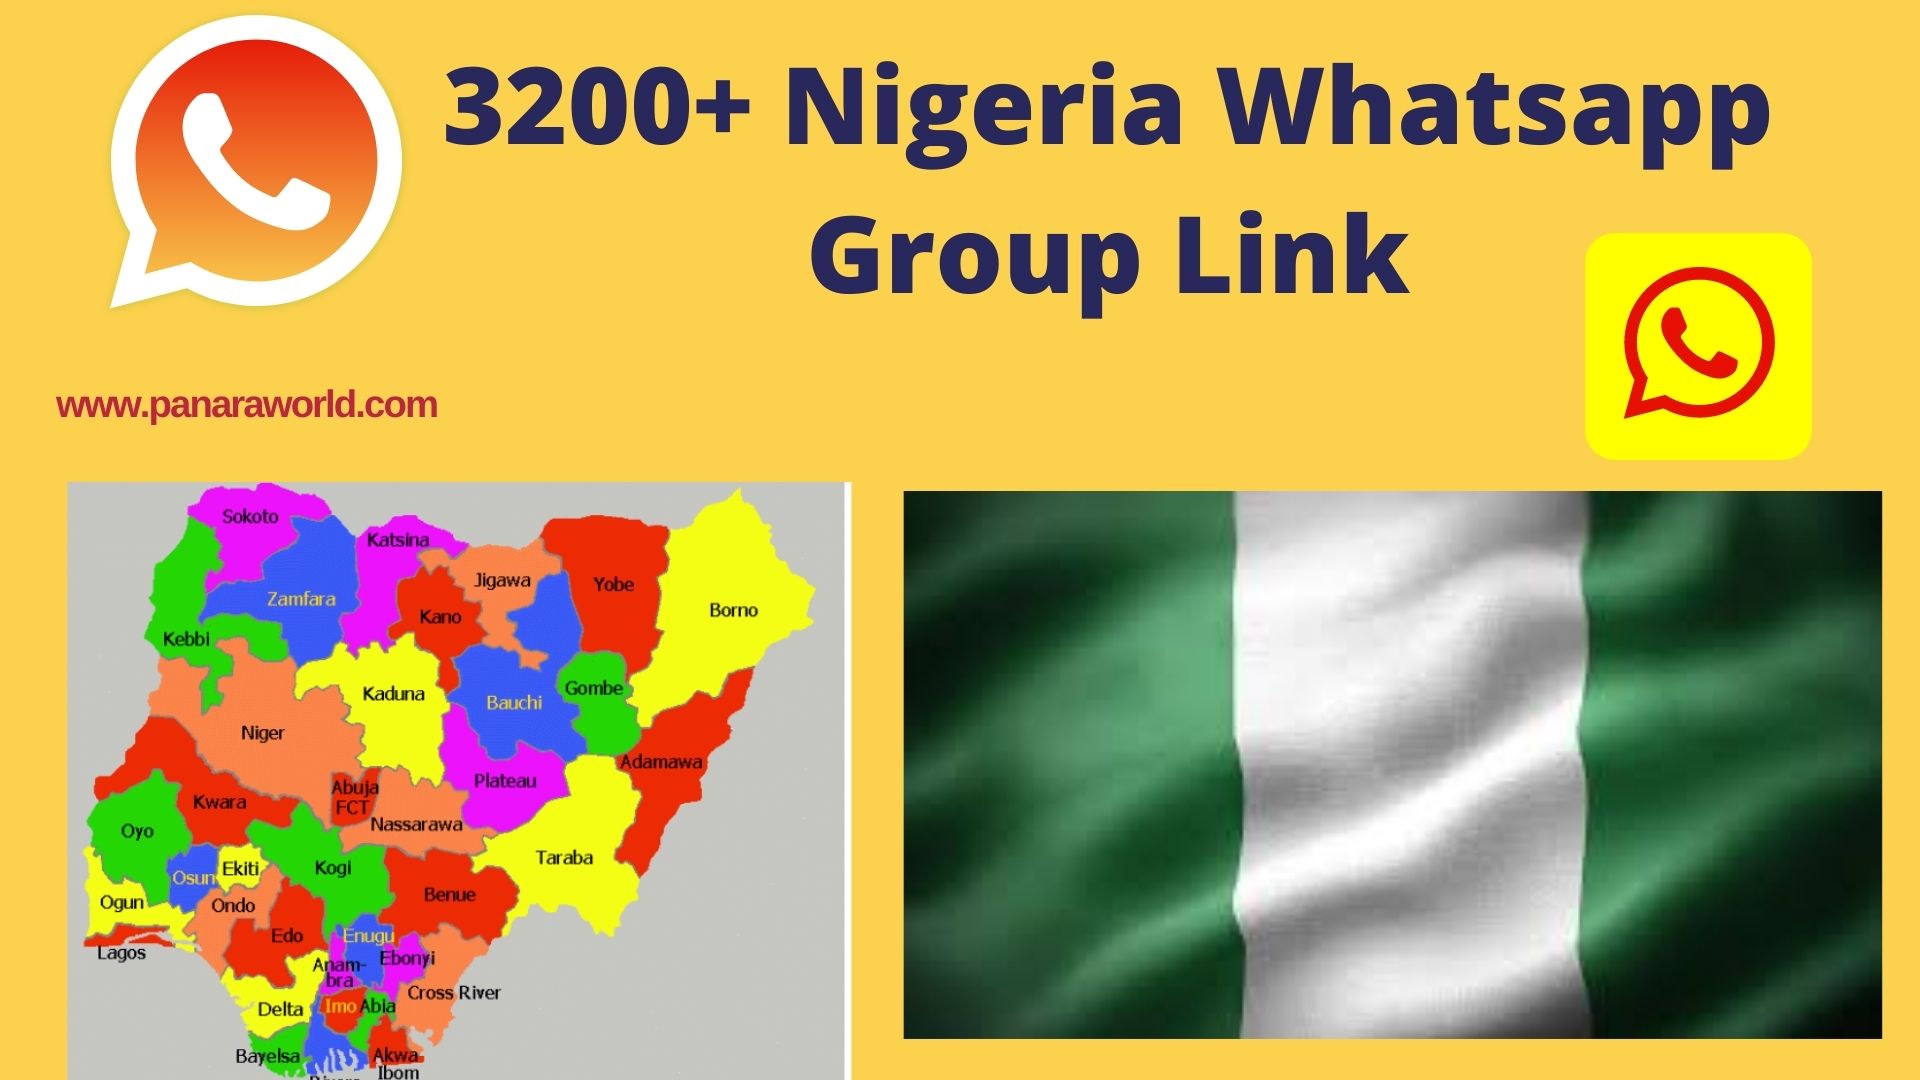 Nigeria Whatsapp Group Link